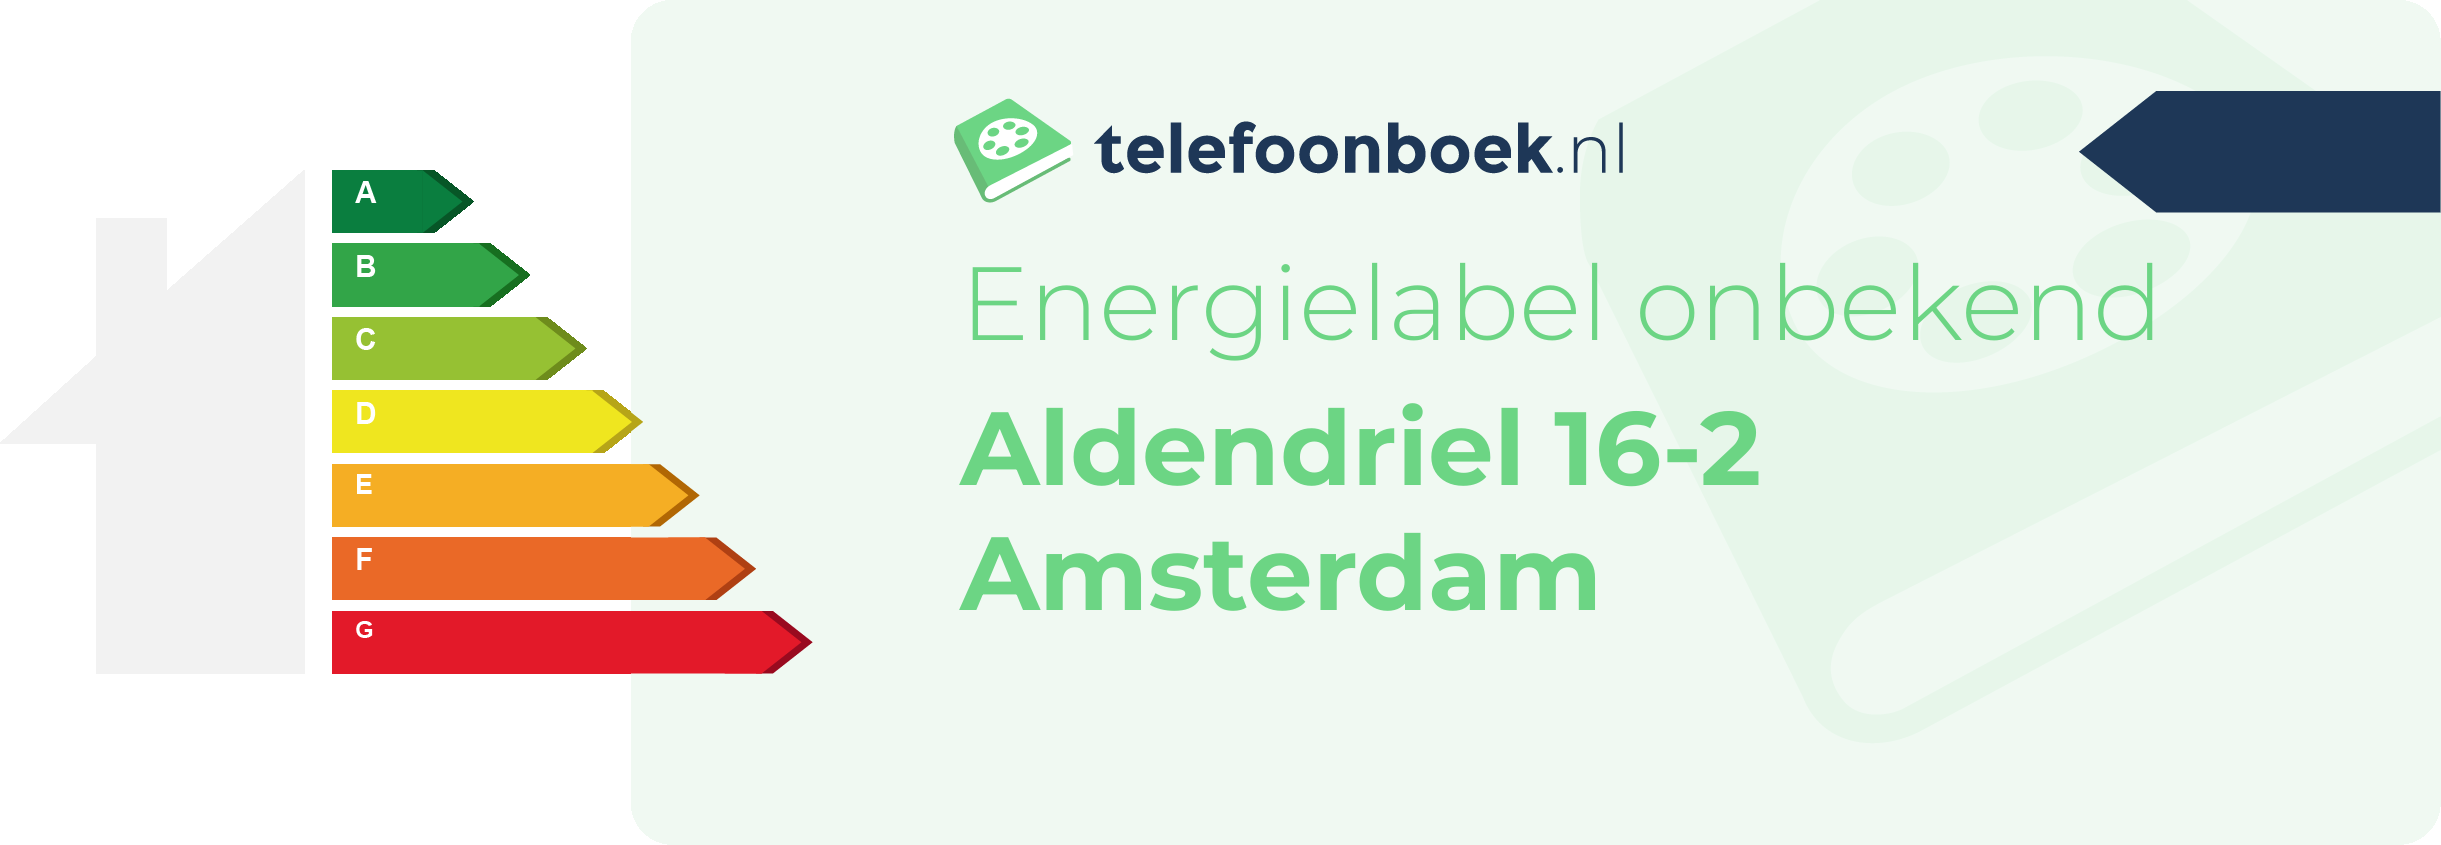 Energielabel Aldendriel 16-2 Amsterdam